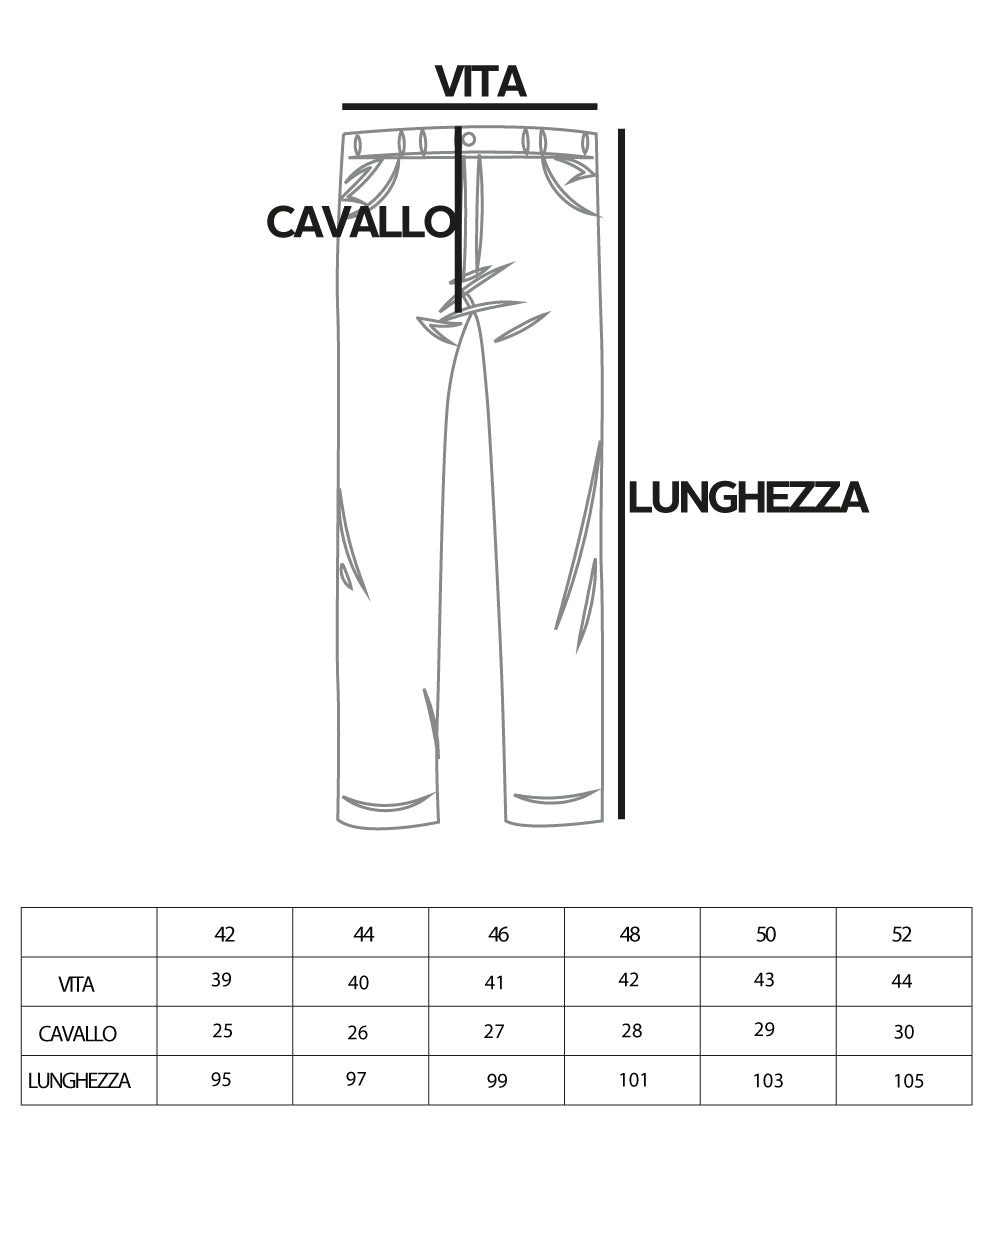 Pantaloni Uomo Tasca America Lungo Classico Slim Blu GIOSAL-P5409A